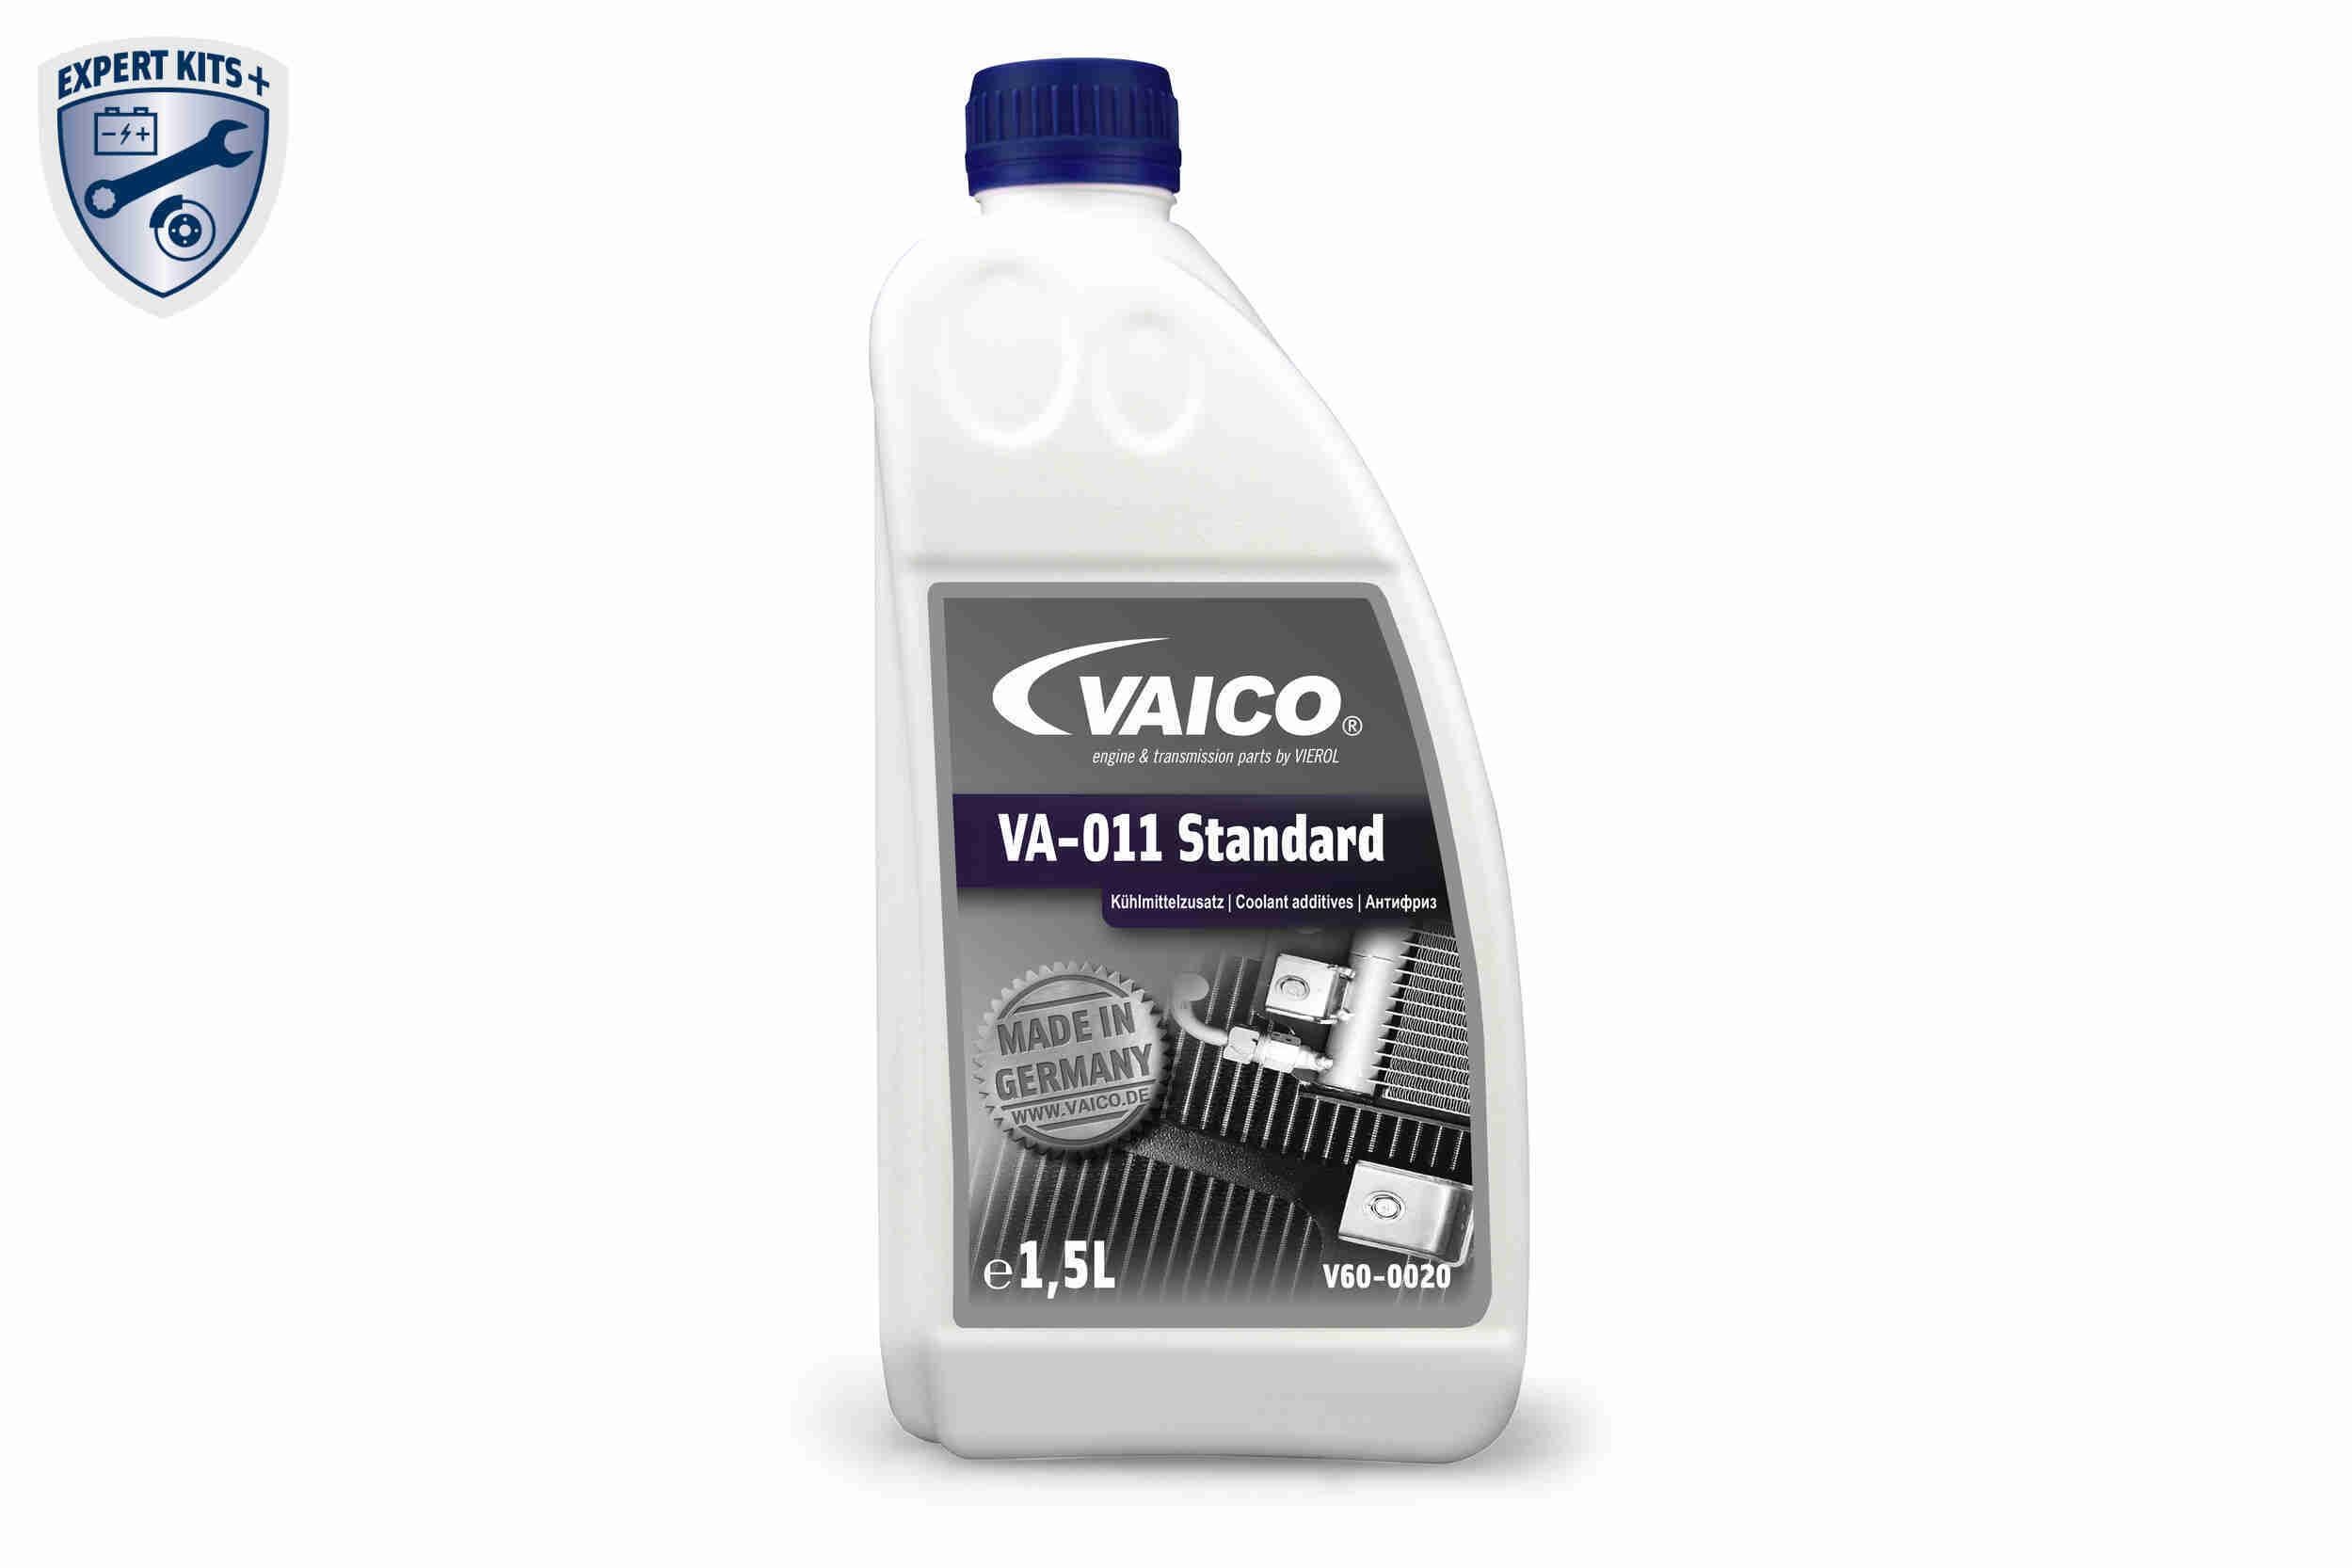 VAICO V60-0020 Antifreeze G 011, G11 blue, 1,5l, Q+, original equipment manufacturer quality MADE IN GERMANY